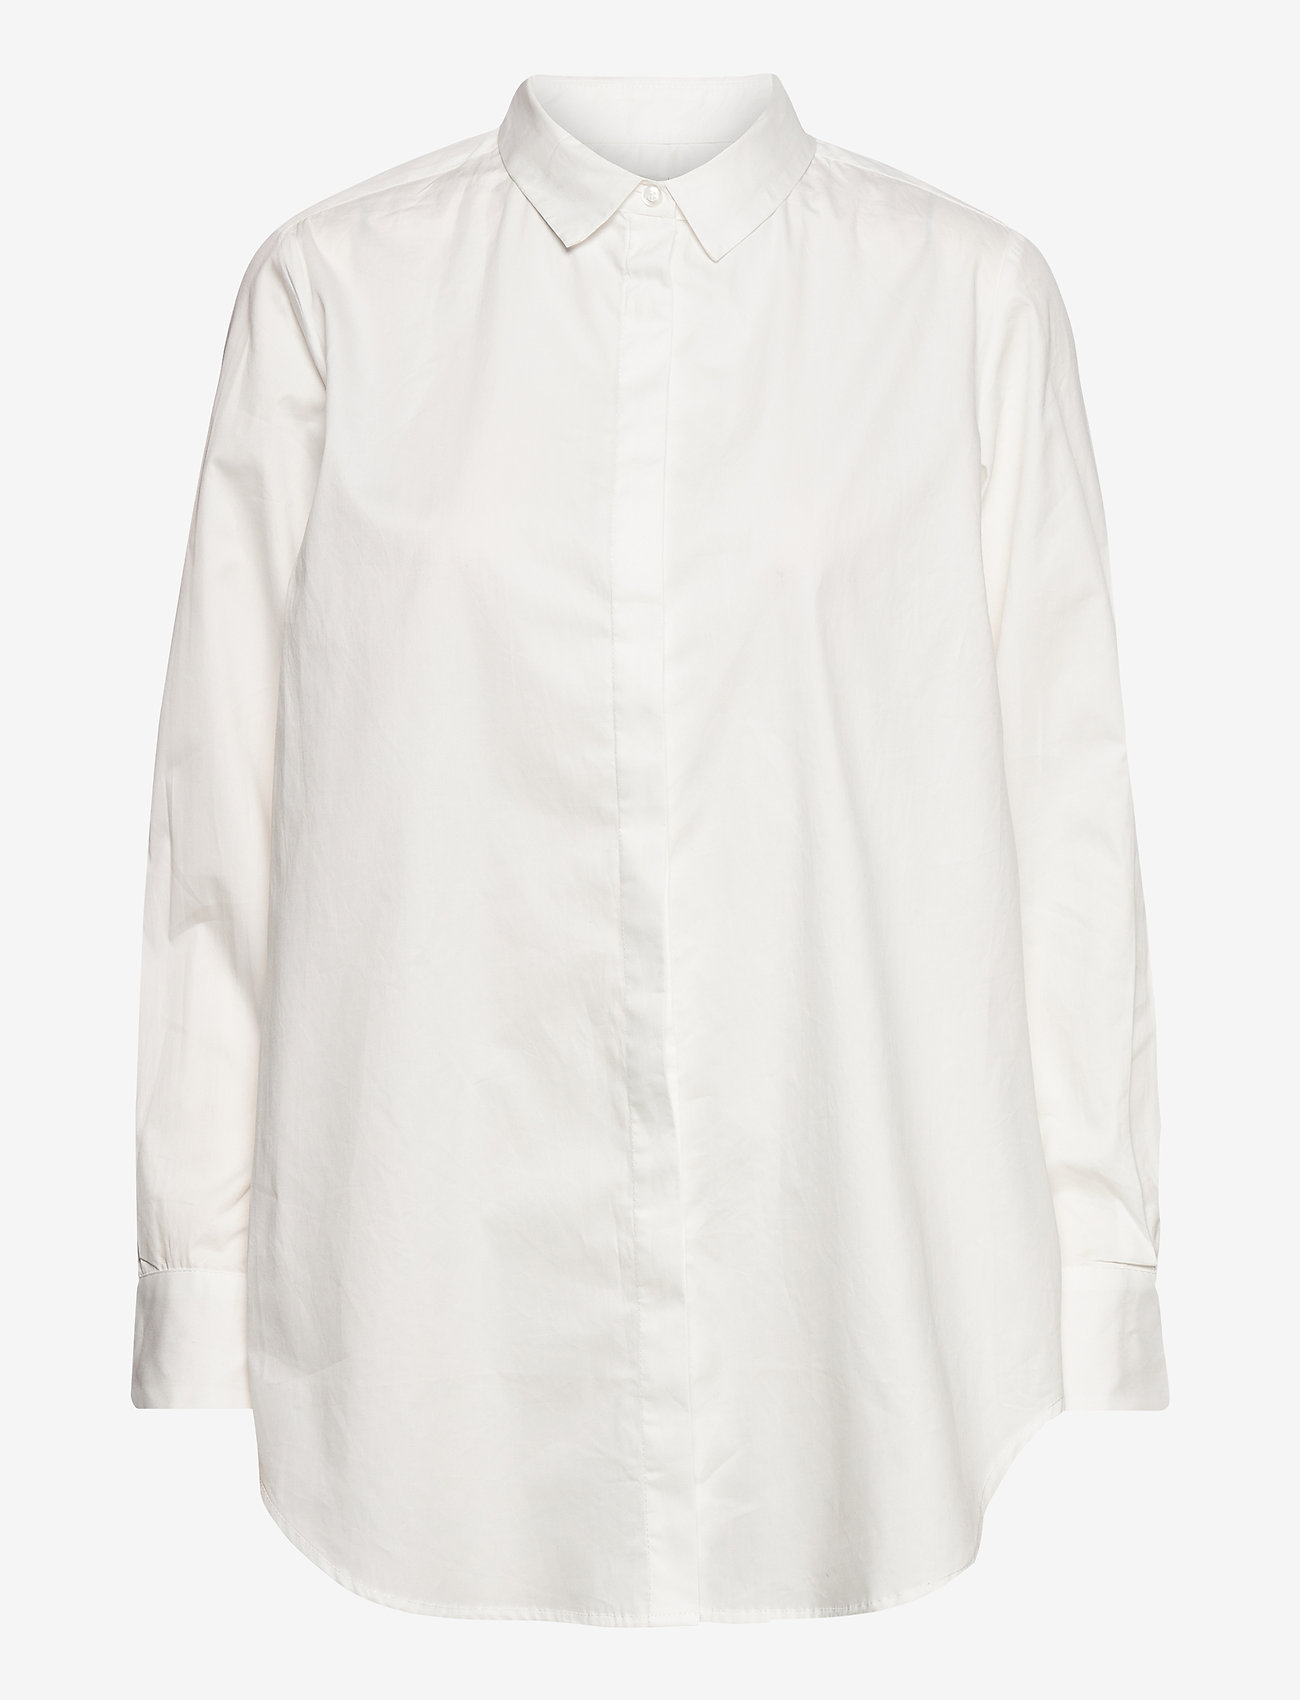 Modström - Arthur shirt - long-sleeved shirts - off white - 0